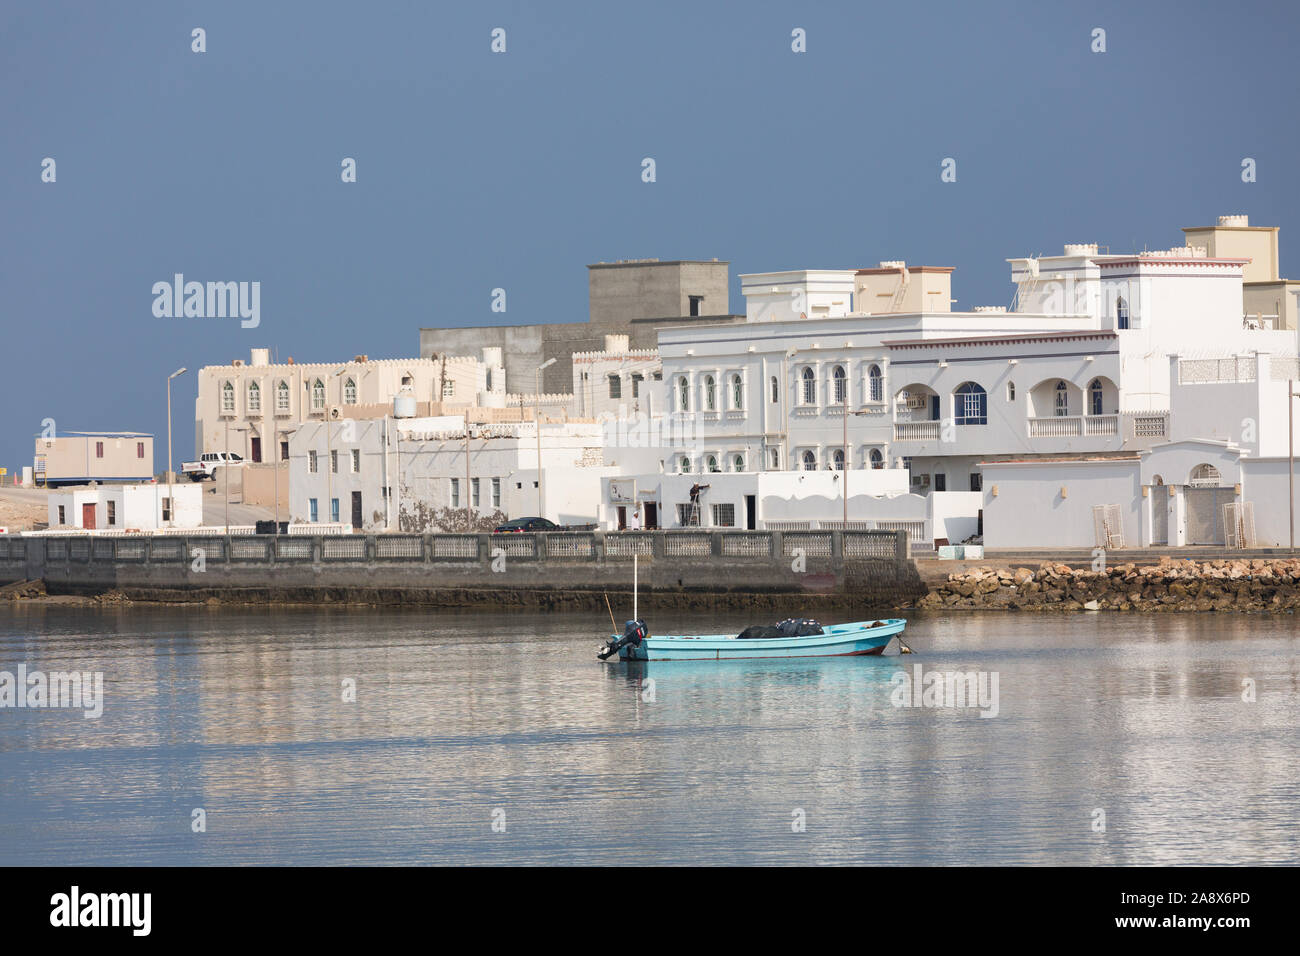 Fishing Village of Sur, Oman Stock Photo